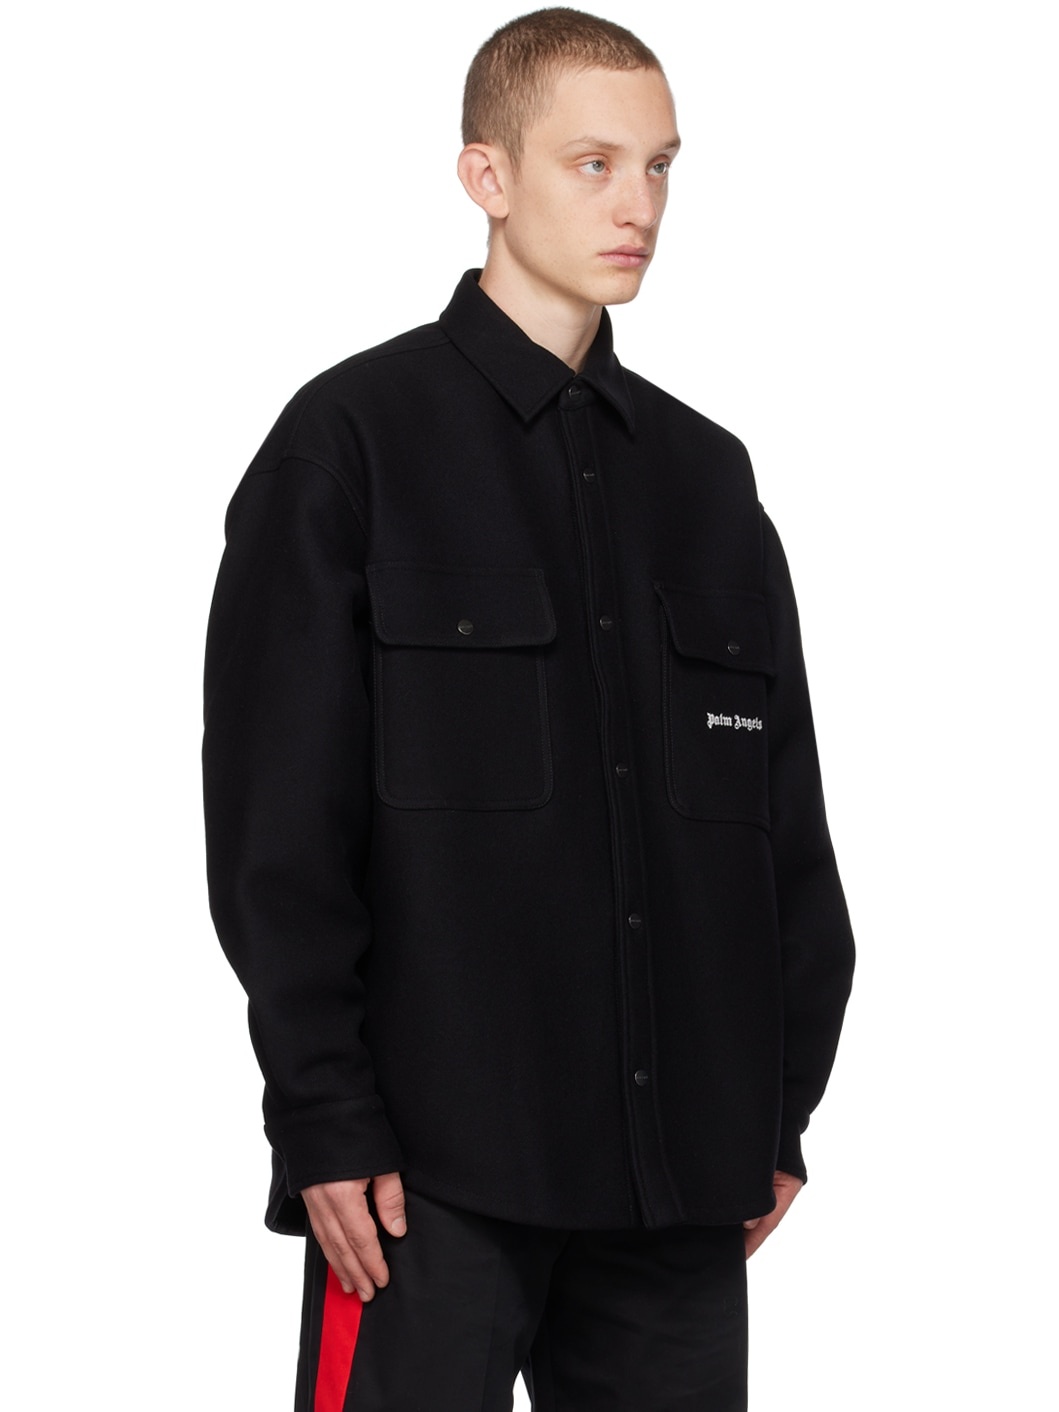 Black Embroidered Jacket - 2